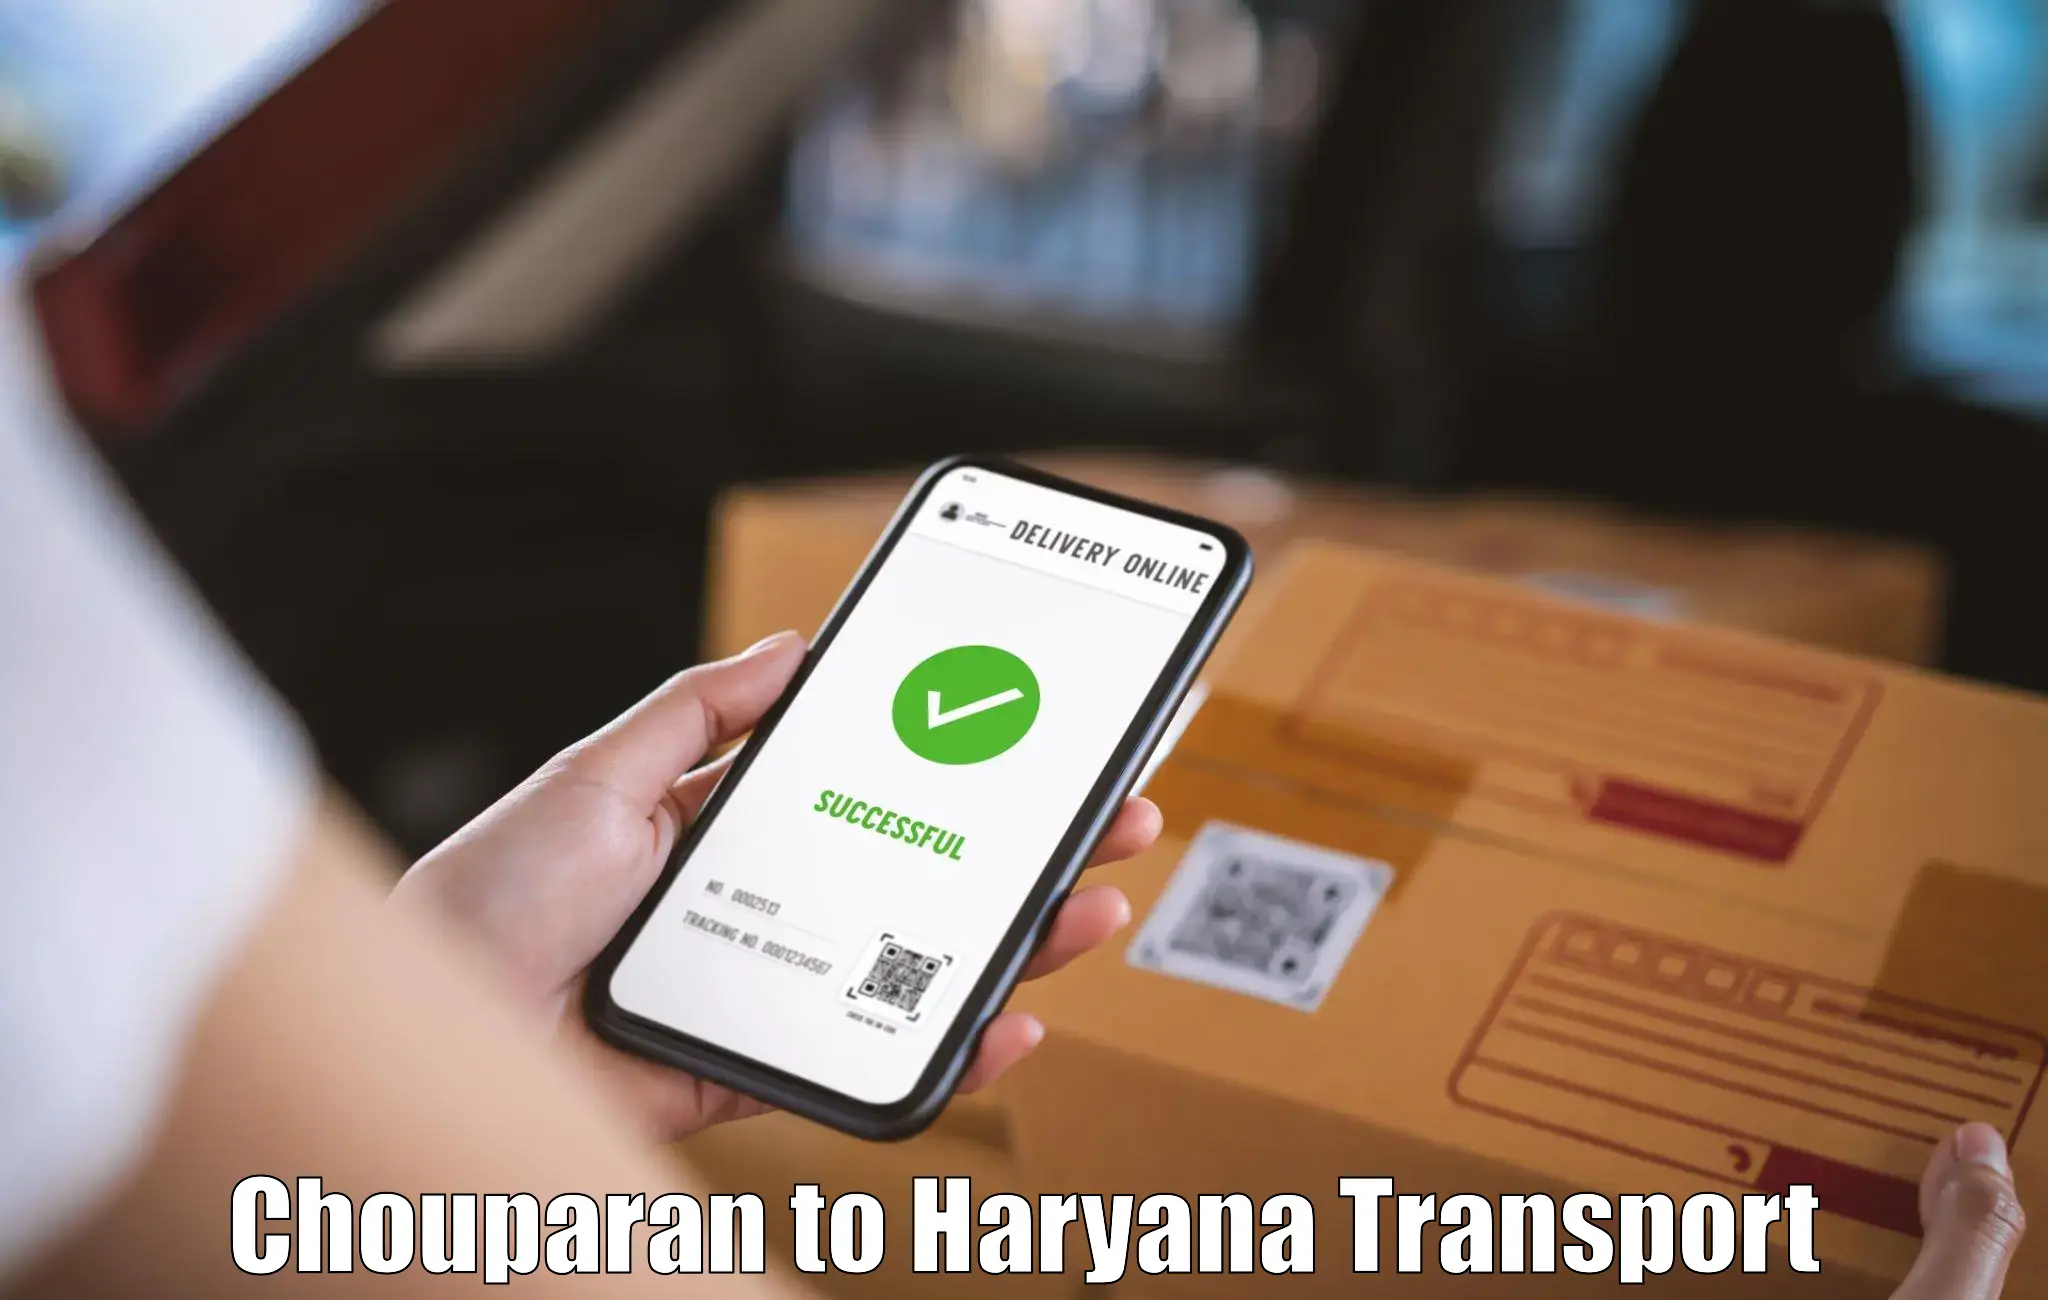 Transport in sharing Chouparan to Bilaspur Haryana